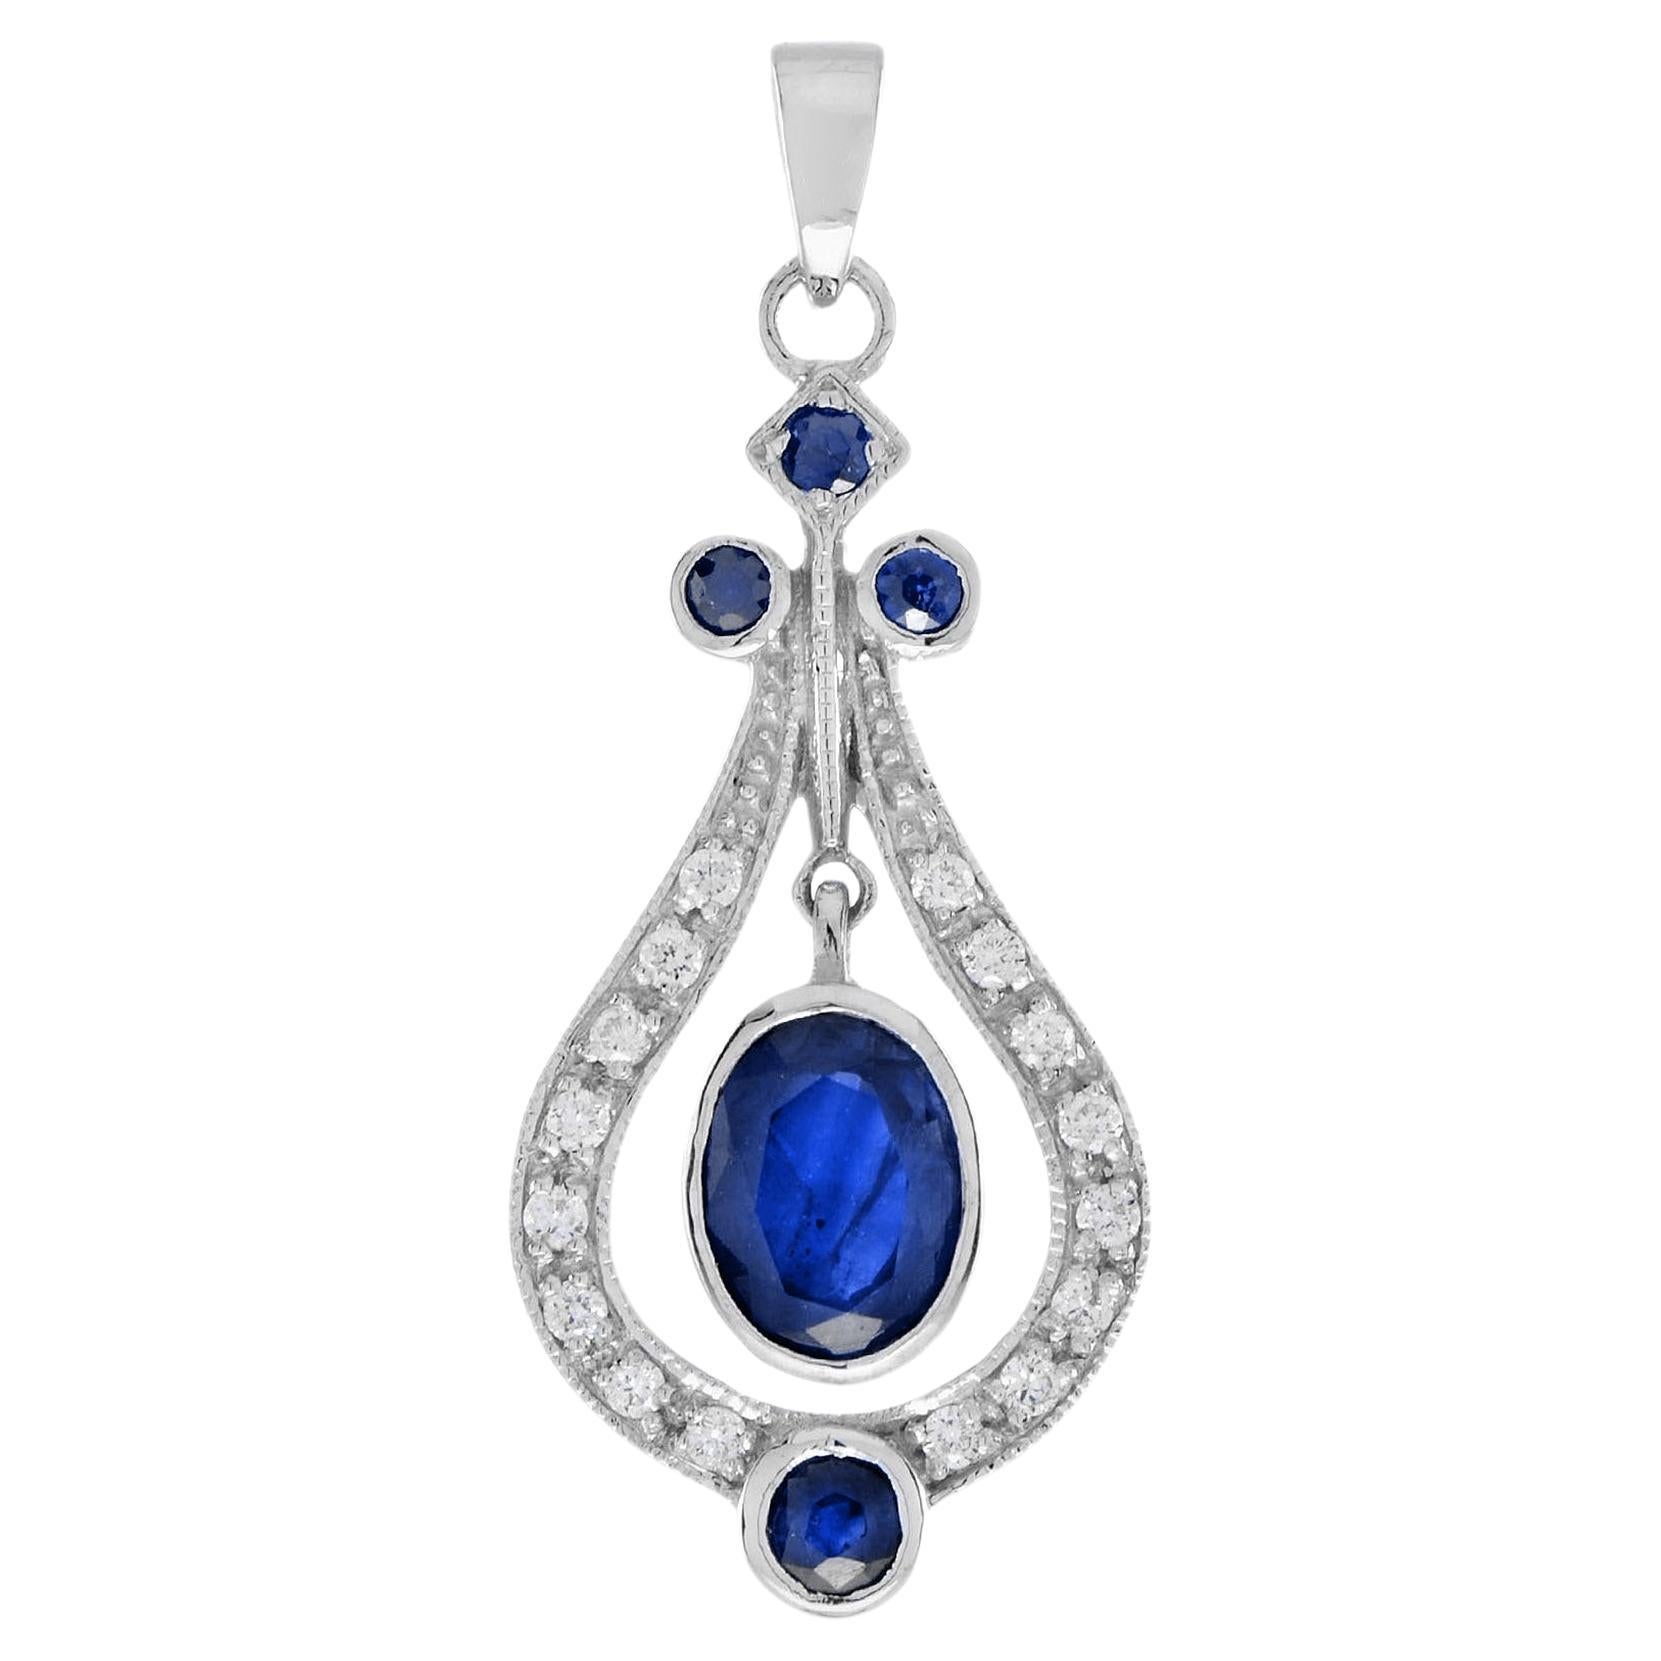 Blue Sapphire and Diamond Art Deco Style Pendant in 18K White Gold